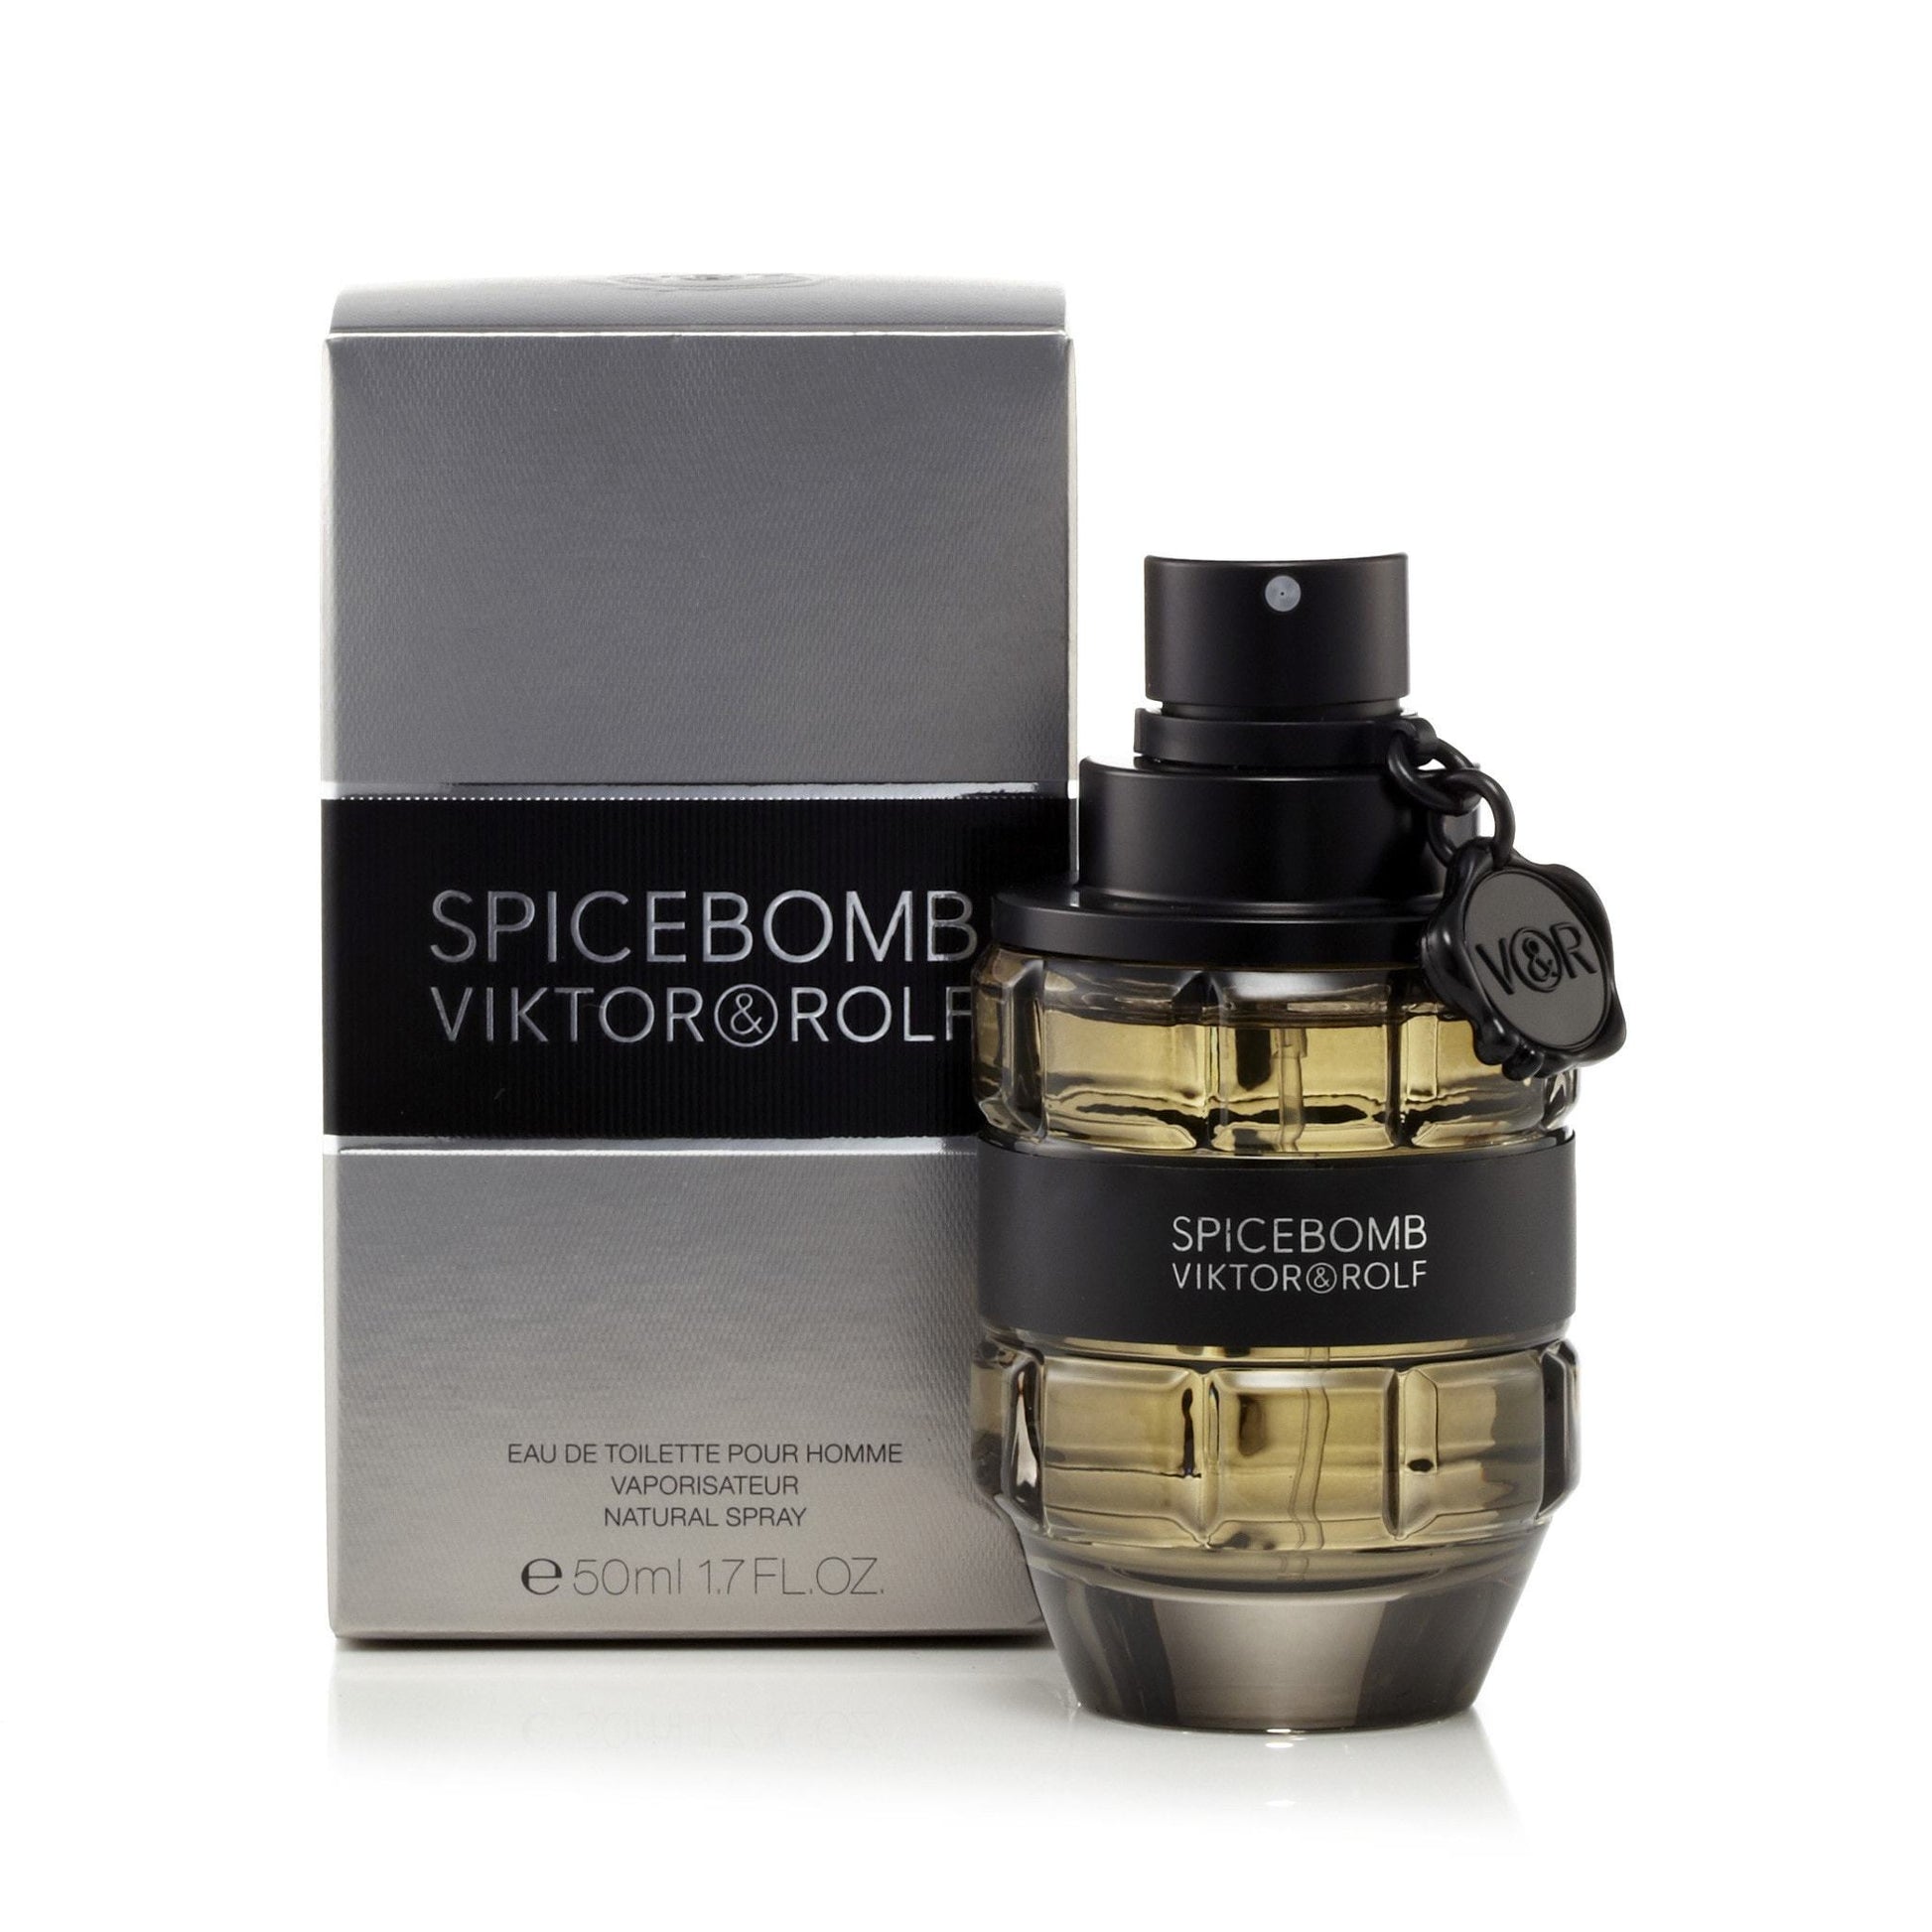 Spicebomb Eau de Toilette Spray for Men by Viktor & Rolf, Product image 4